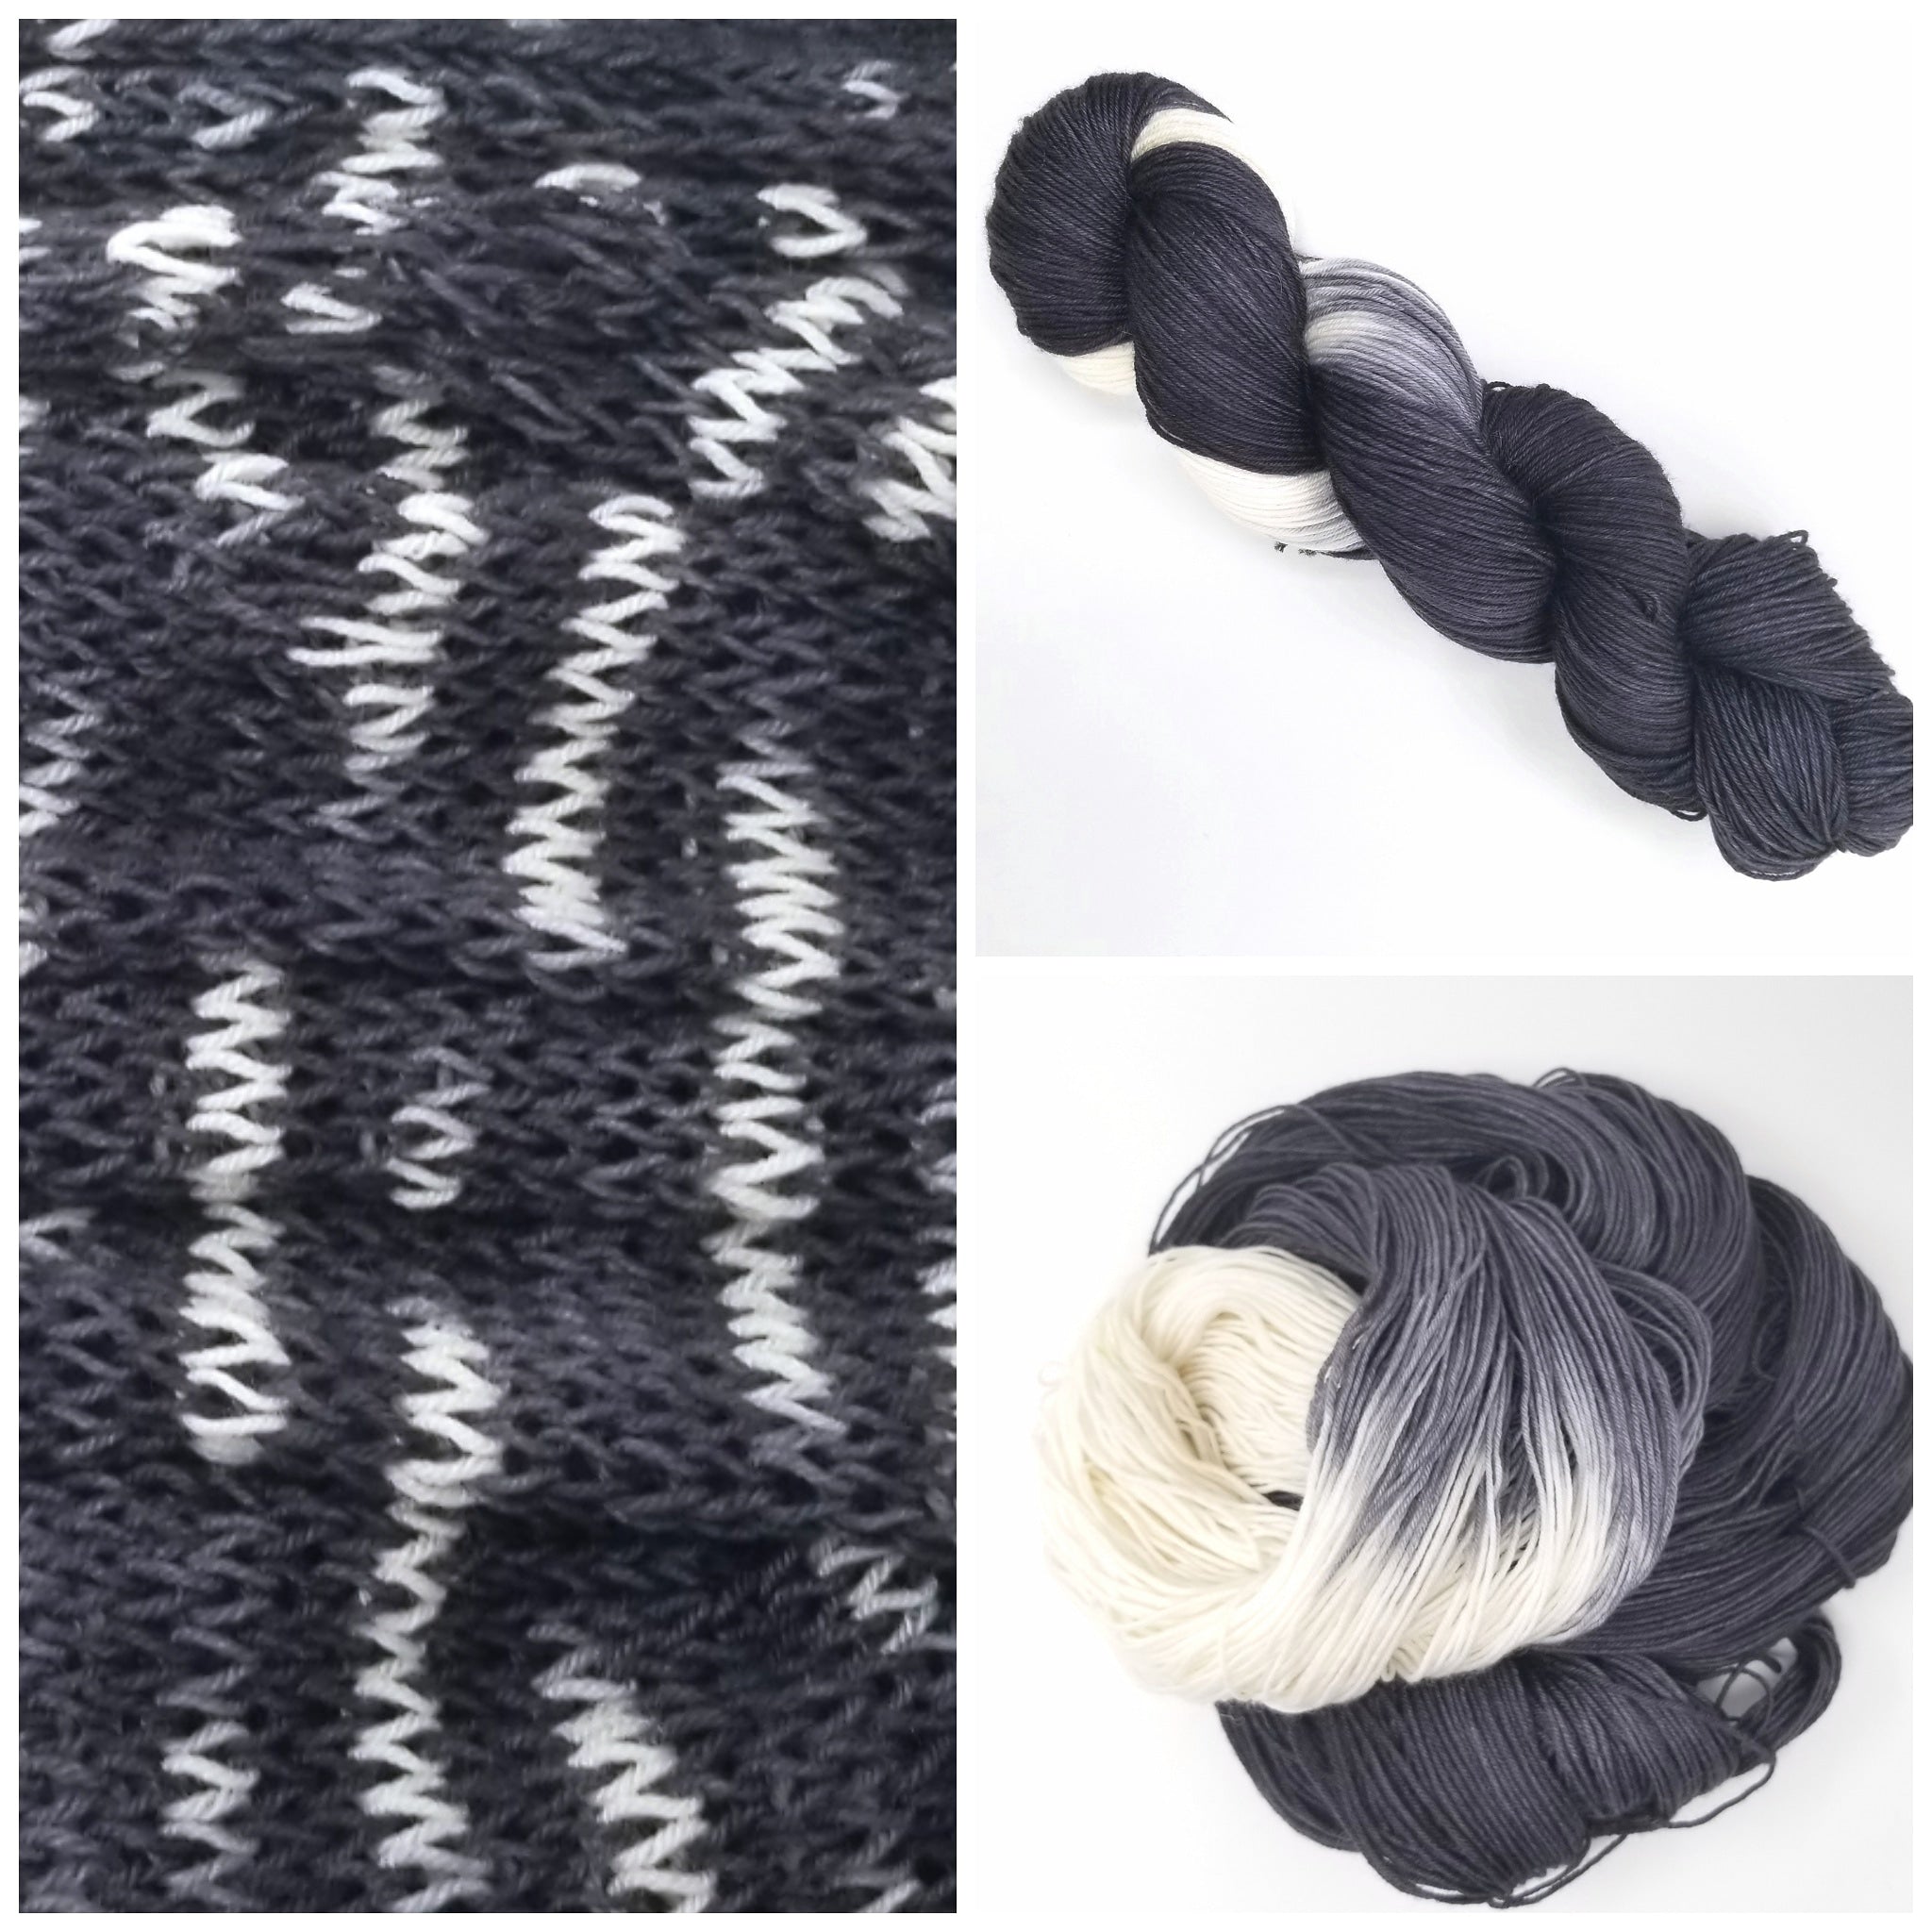 Hand Dyed Yarn. Black and White Variegated Colourway on Sparkle Dk Yarn.  Black With White Dk Yarn, Warp Speed Monochrome Yarn. -  UK